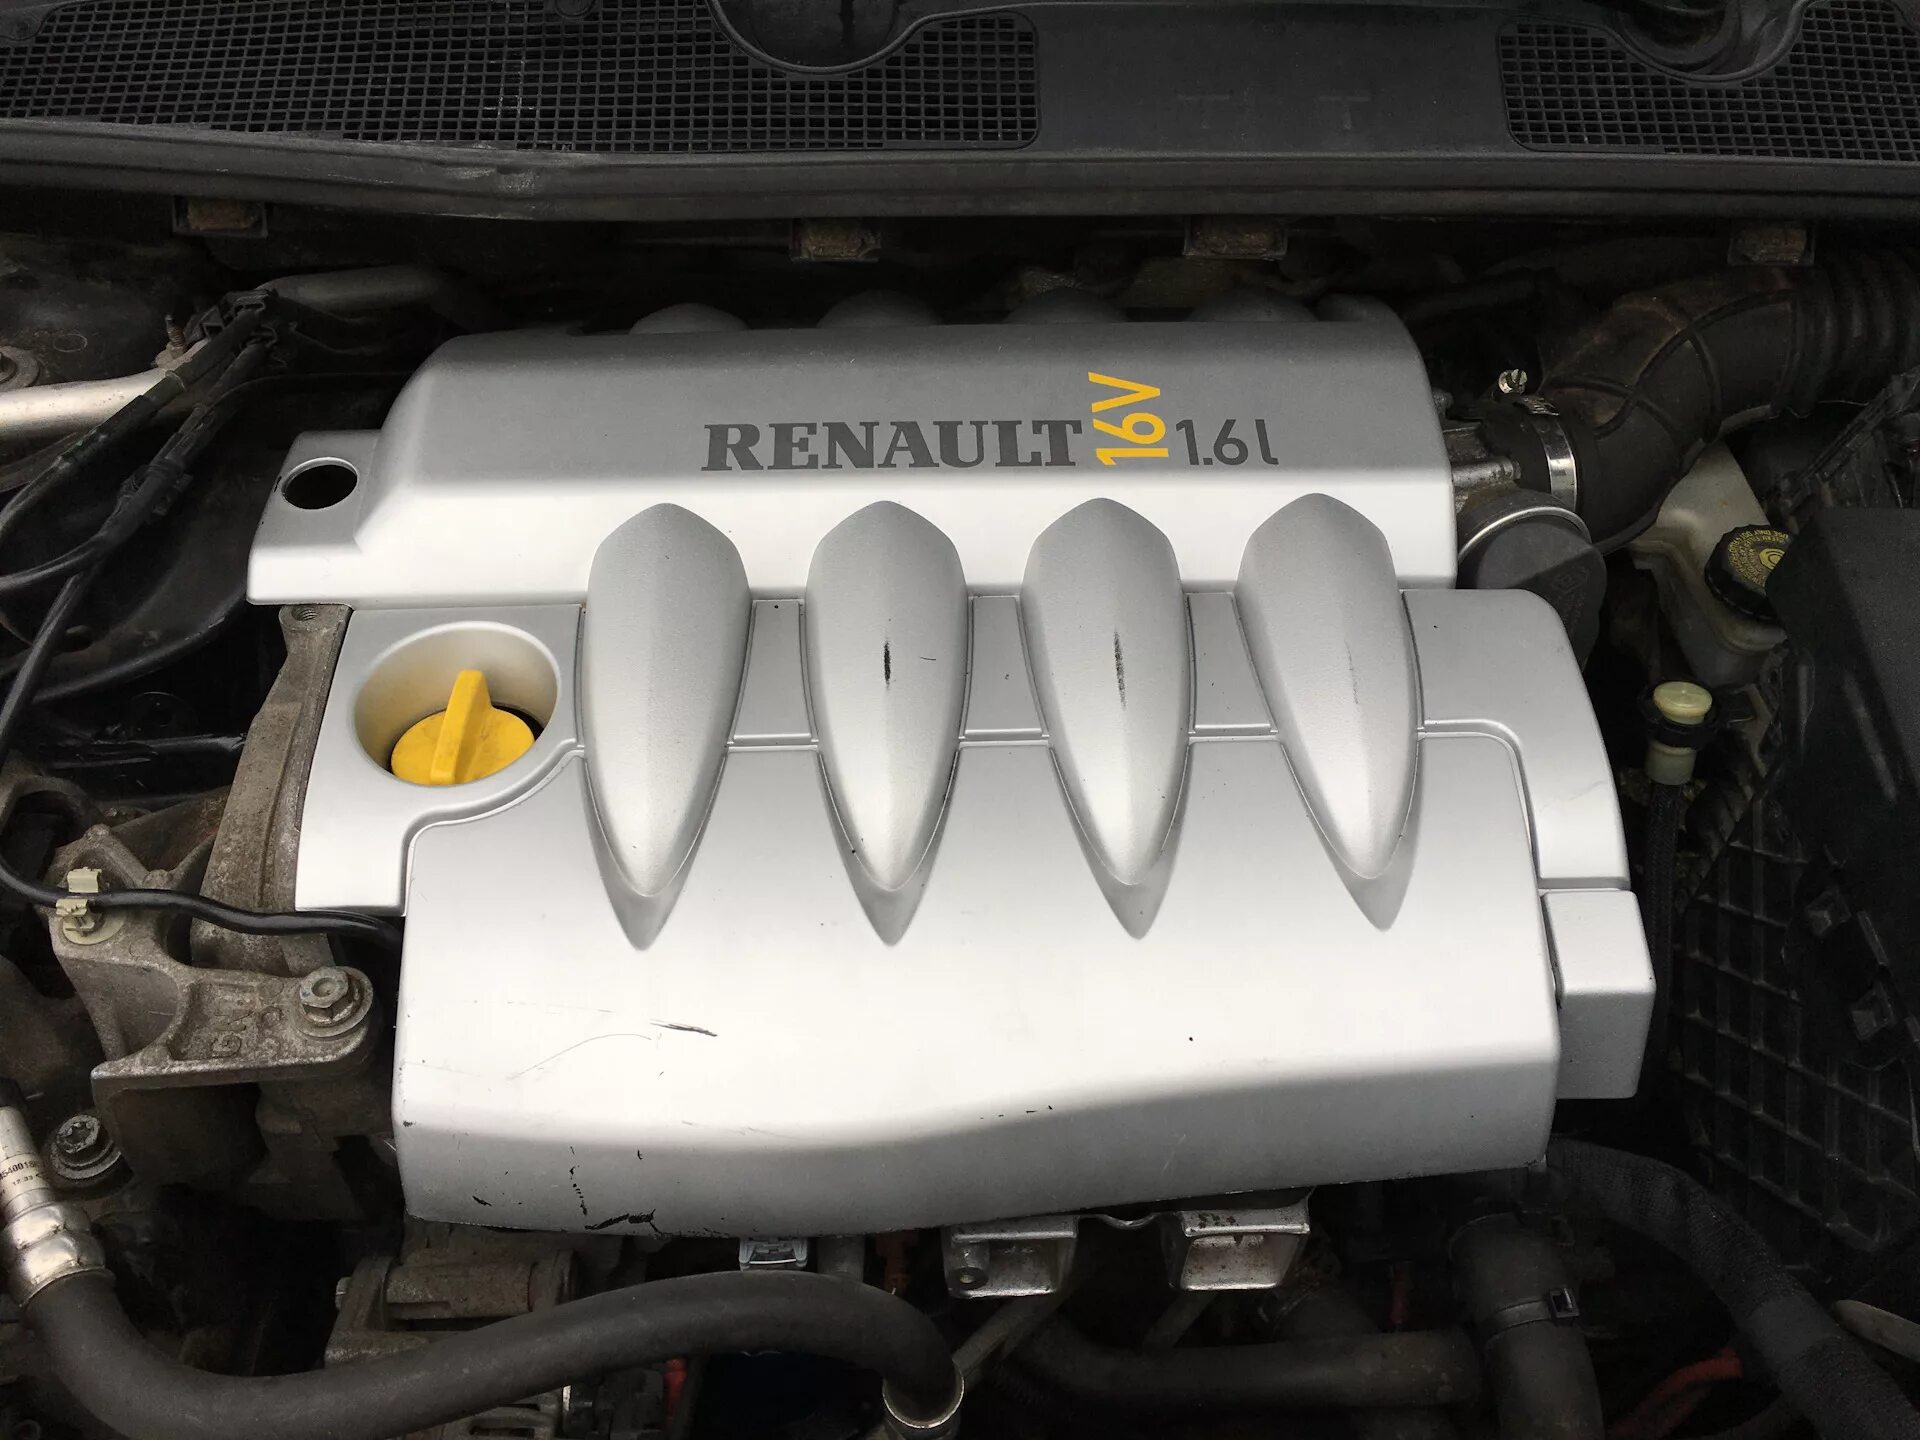 Renault fluence двигатели. Крышка двигателя Renault Fluence 1.6. Декоративная крышка двигателя Рено Флюенс 1.6. Декоративная накладка на двигатель Рено Флюенс 1.6. Крышка двигателя Рено к4м.